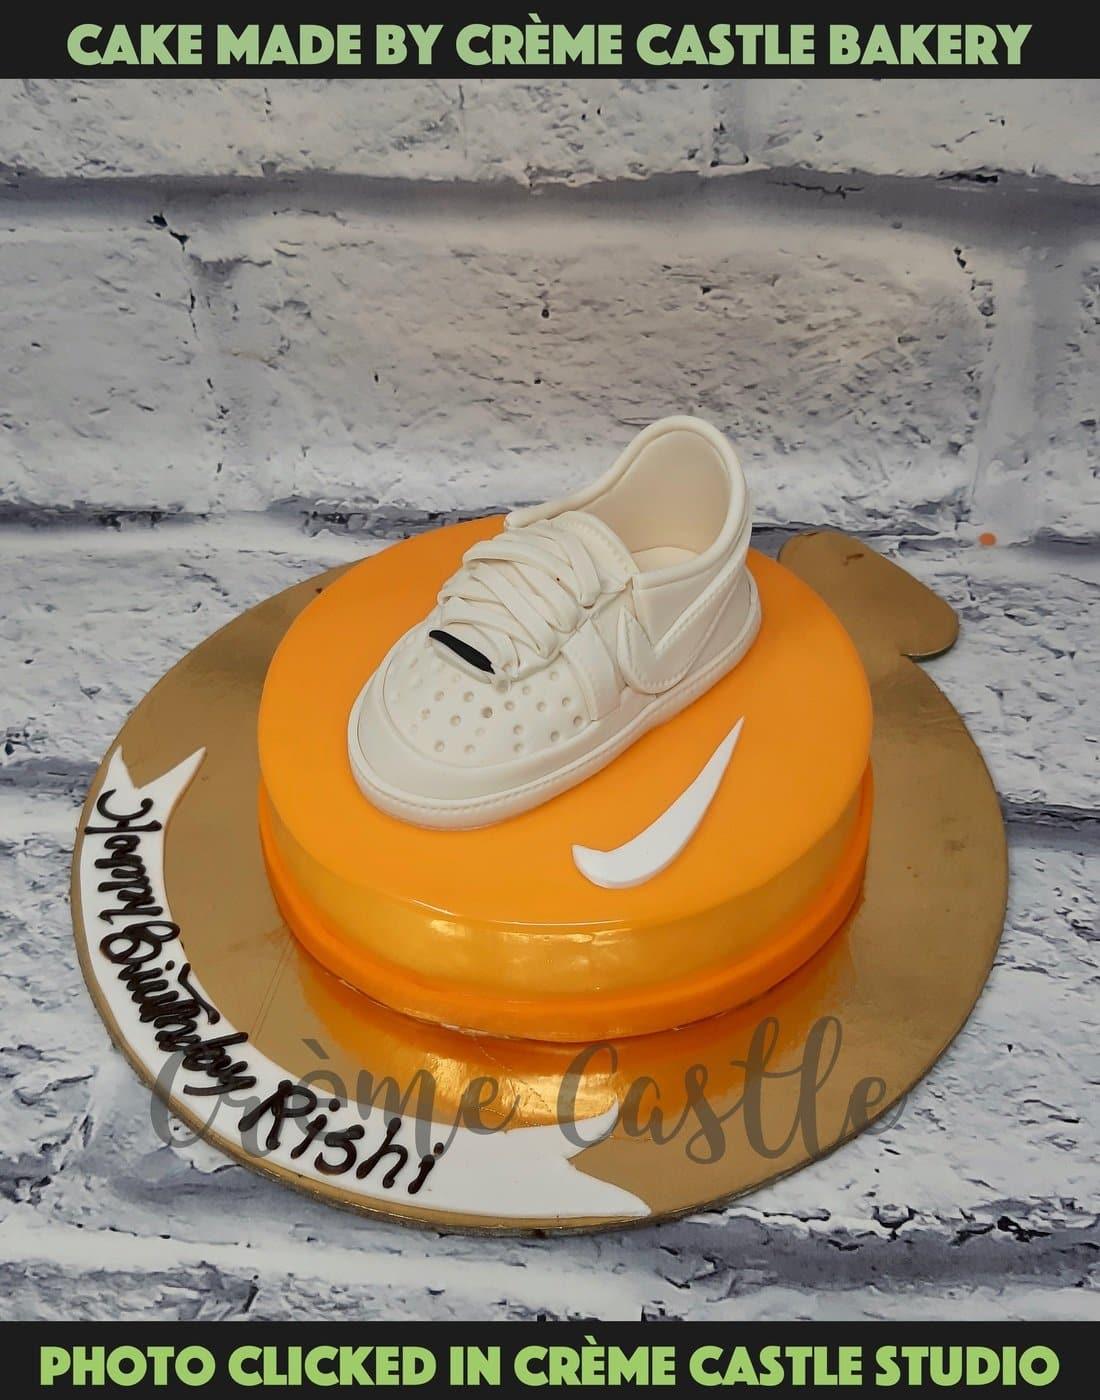 Nike Sneakers cake - Creme Castle